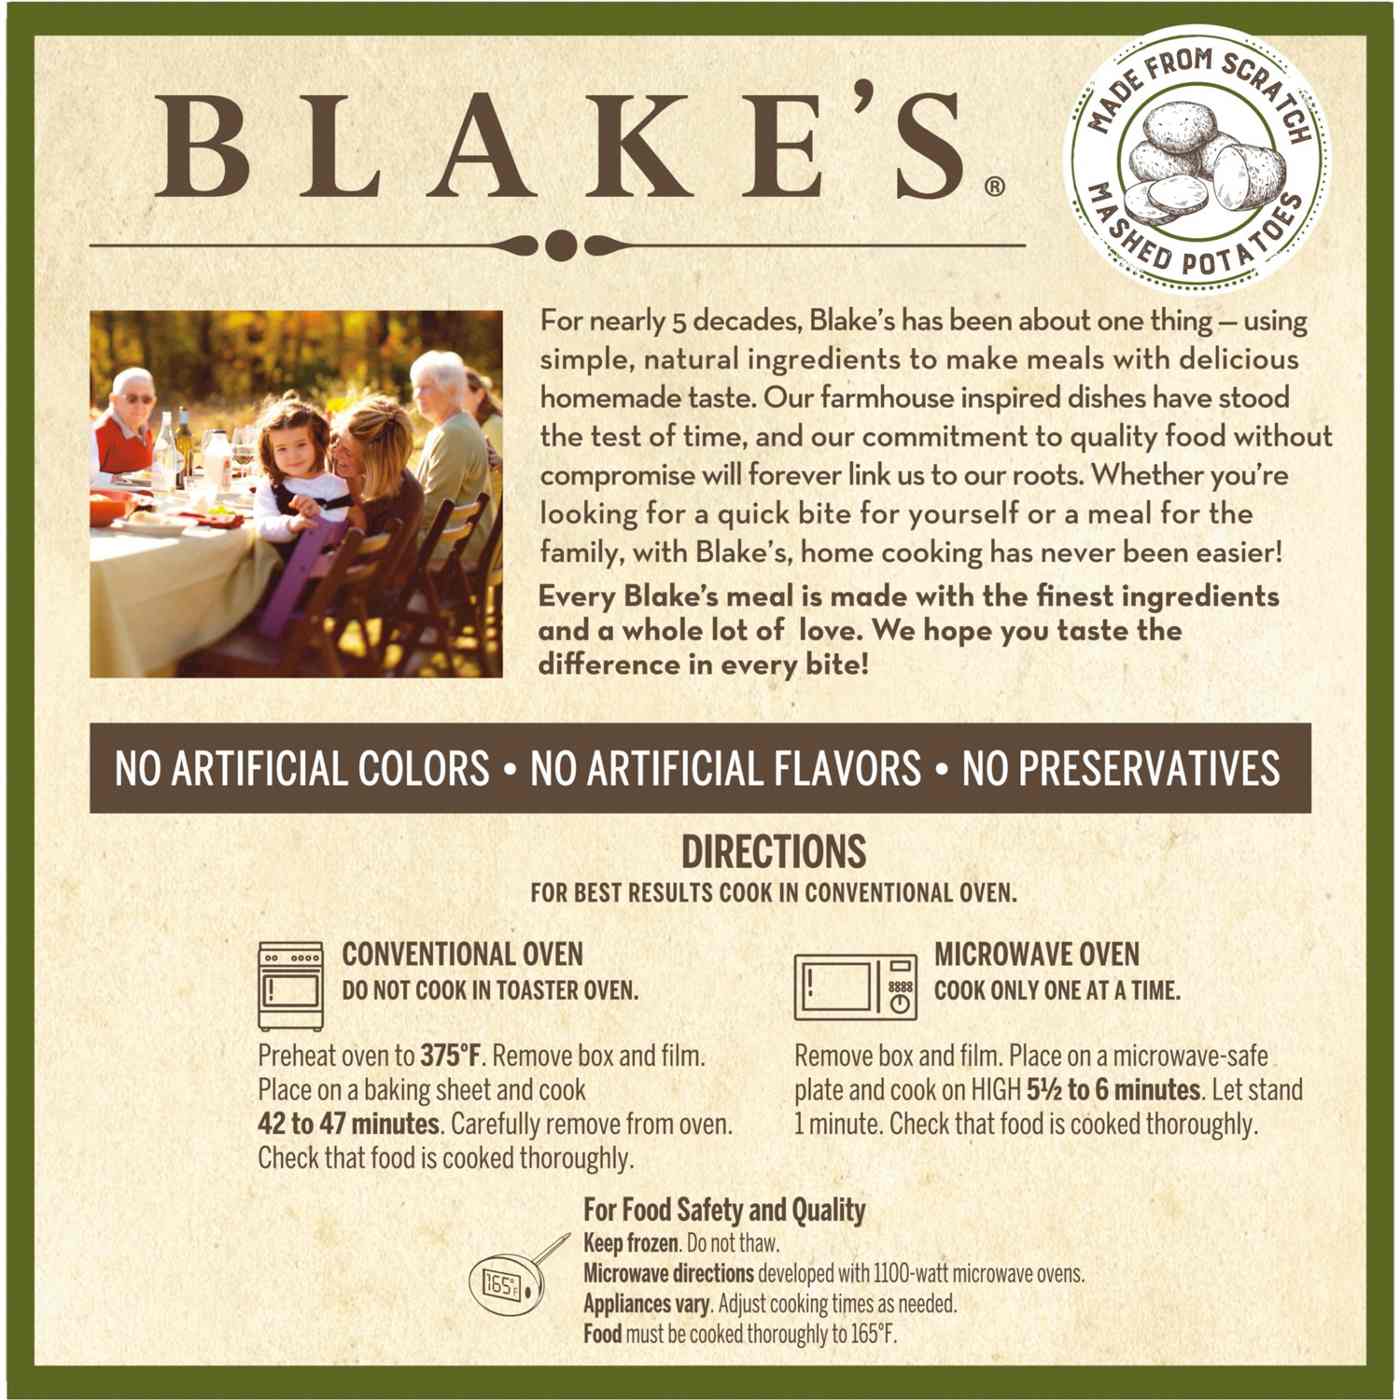 Blake's Shepherd's Pie; image 7 of 7